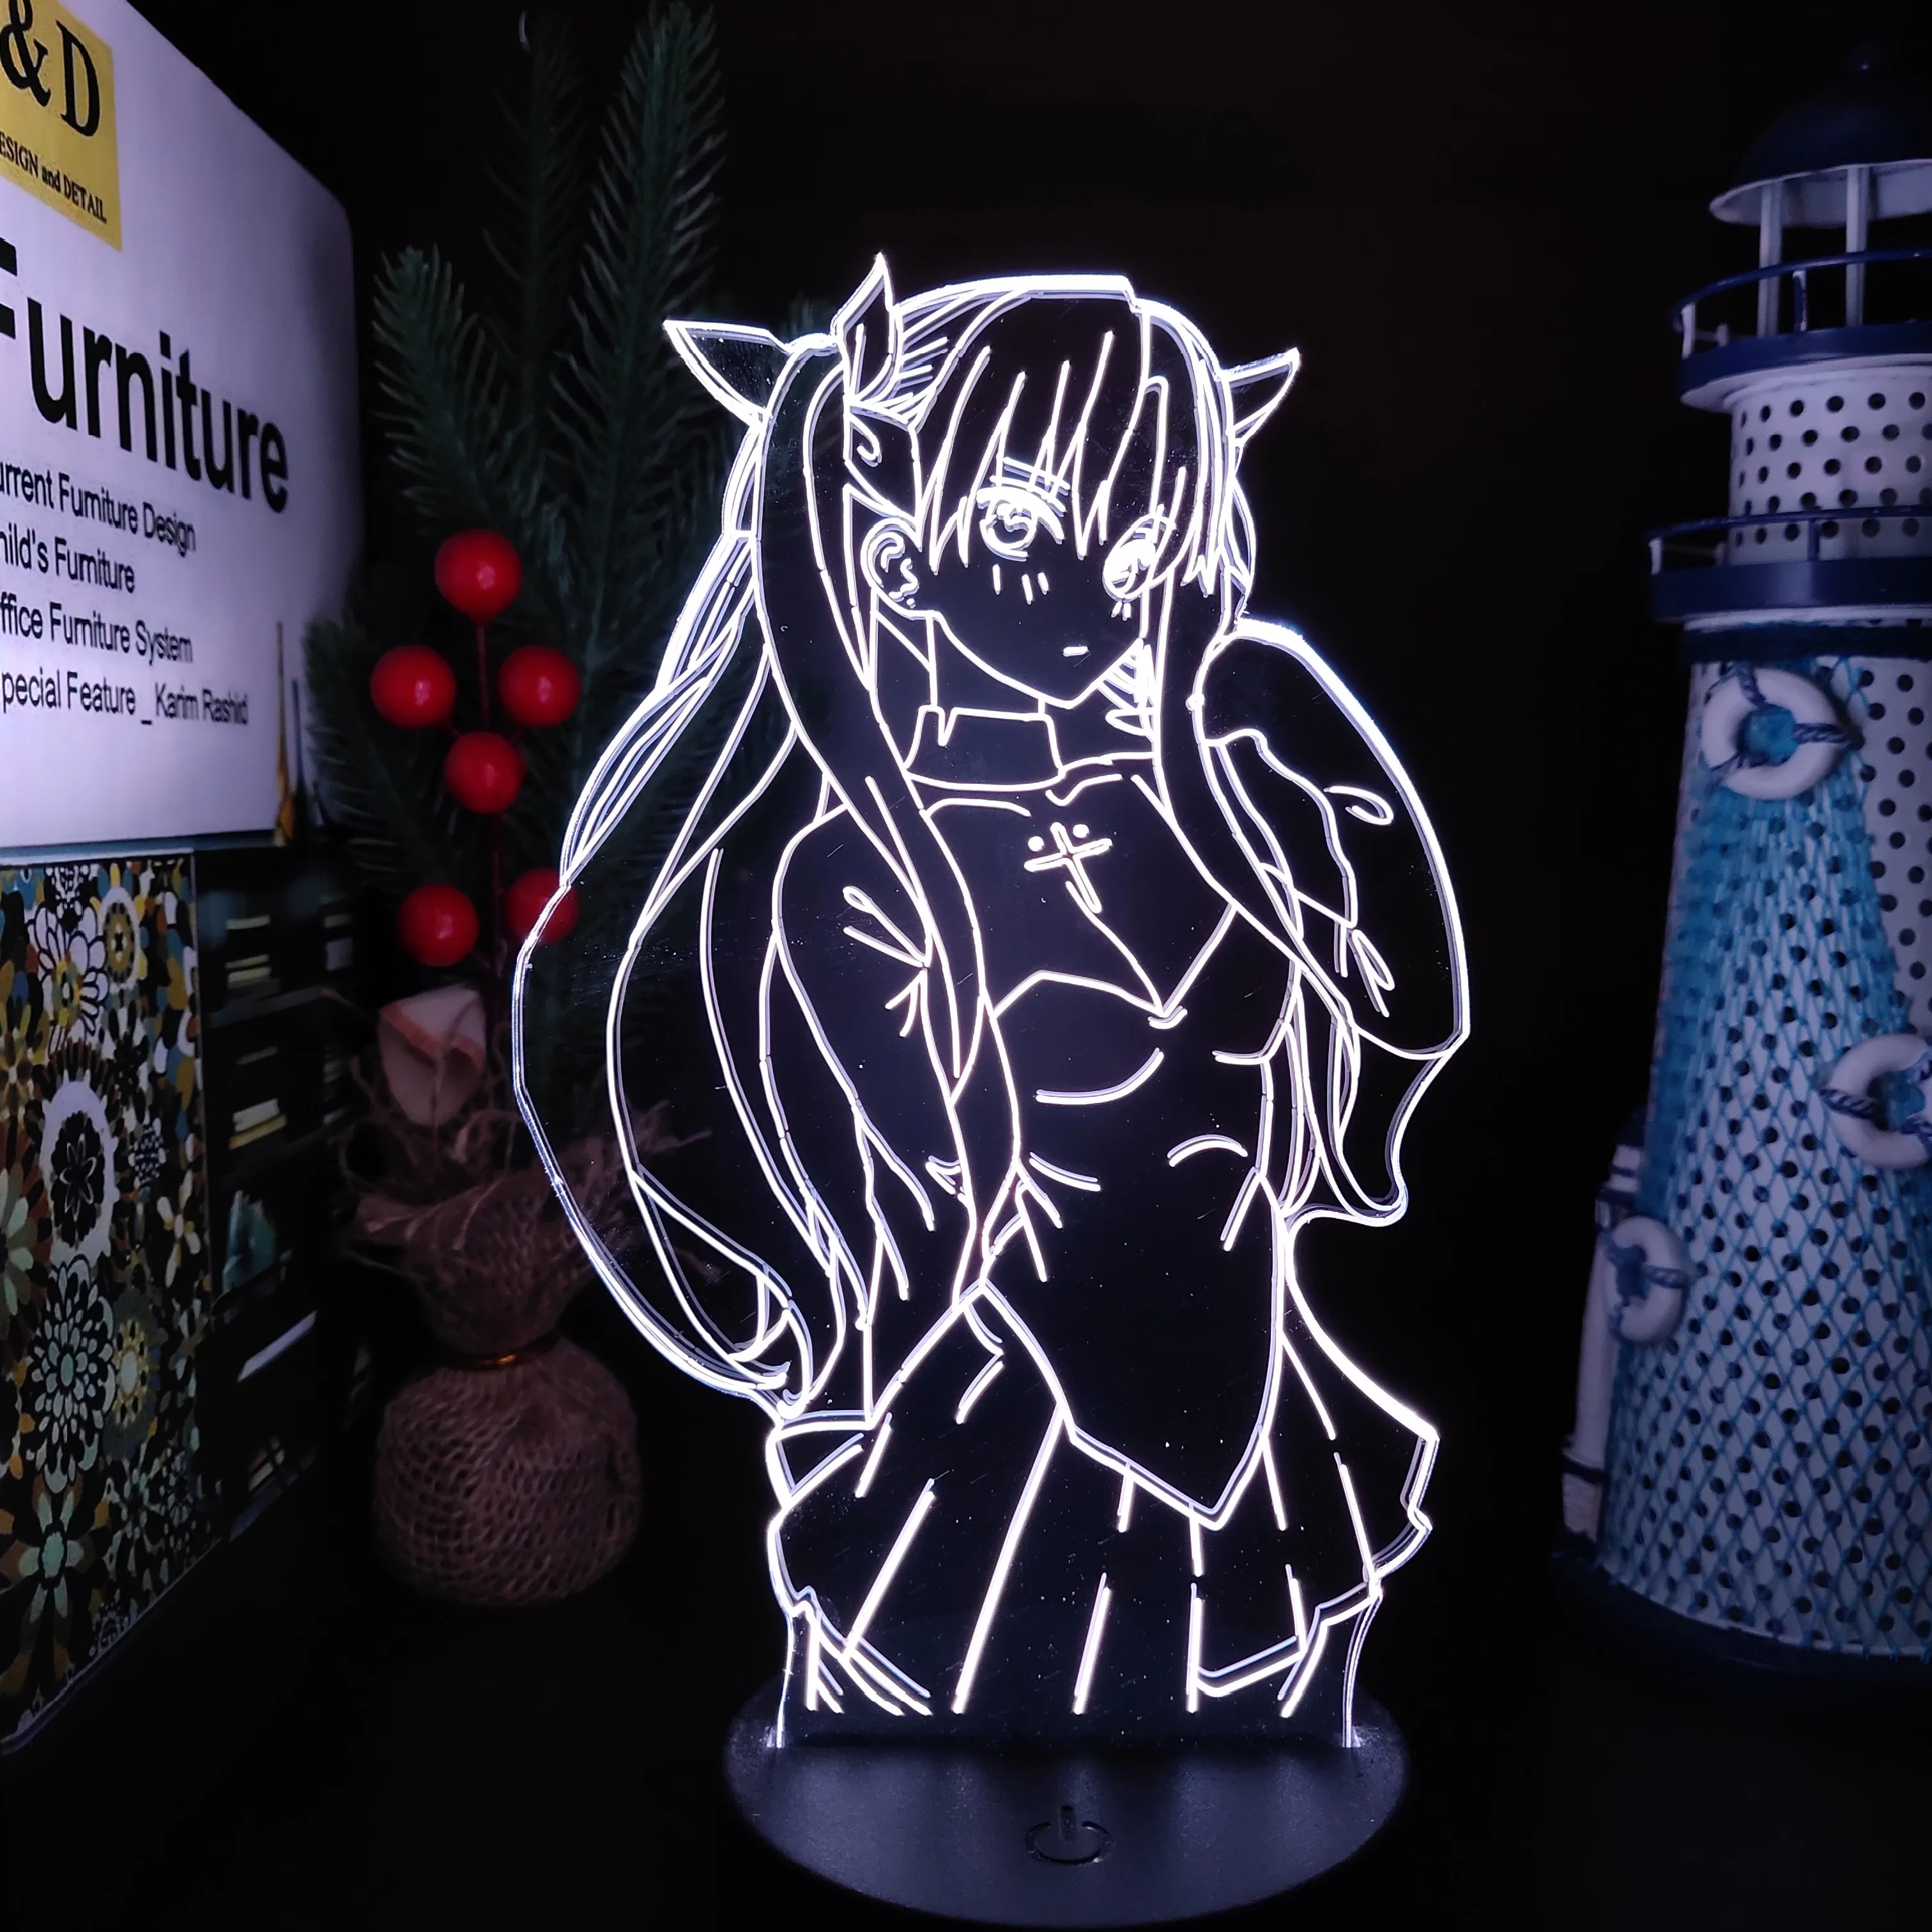 Y night tohsaka rin anime 3d led illusion lamp nightlights lampara for home decor table thumb200